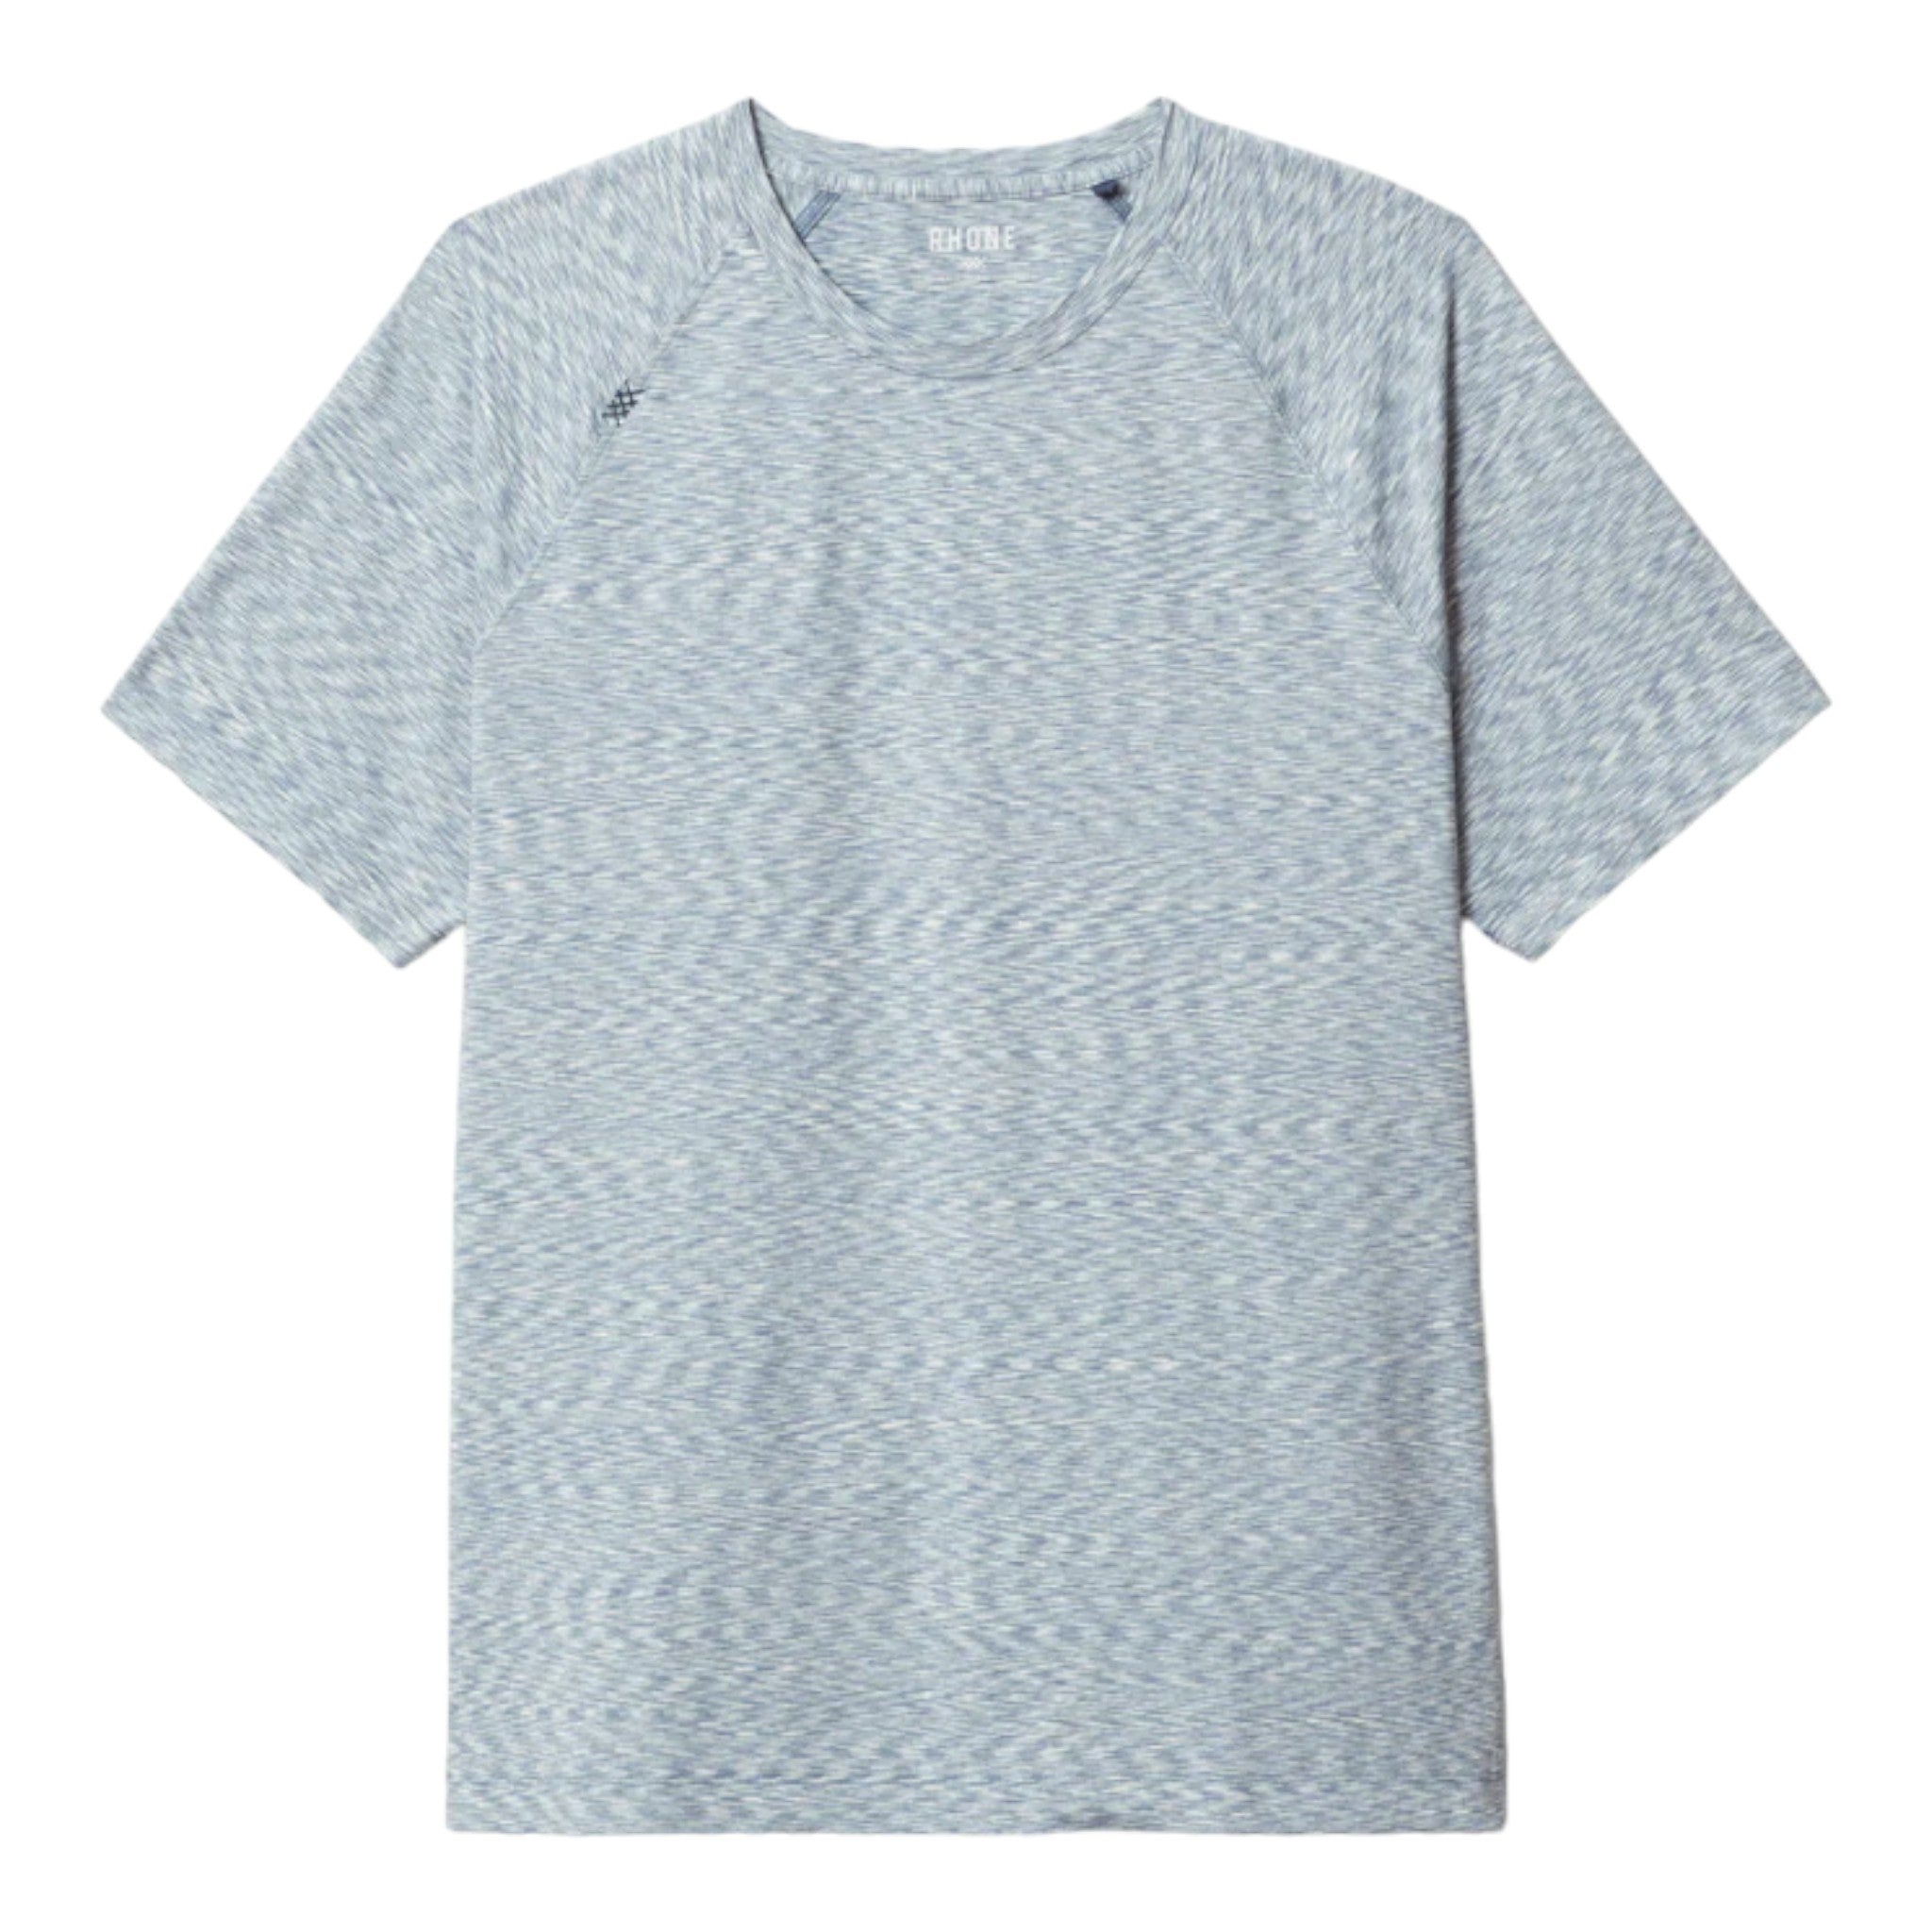 Rhone - Reign Short Sleeve T-Shirt - True Blue / Aquamarine Space Dye